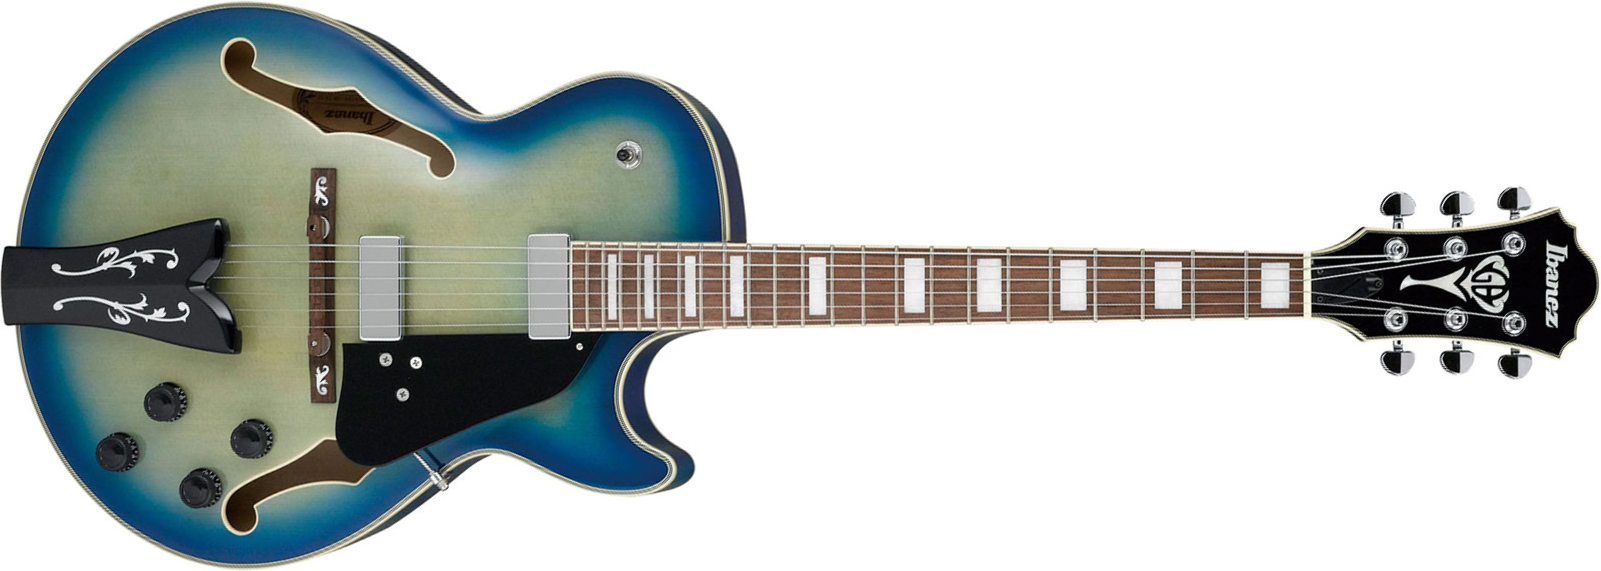 Ibanez George Benson Gb10em Jbb Signature Hh Ht Eb - Jet Blue Burst - Hollow-body electric guitar - Main picture